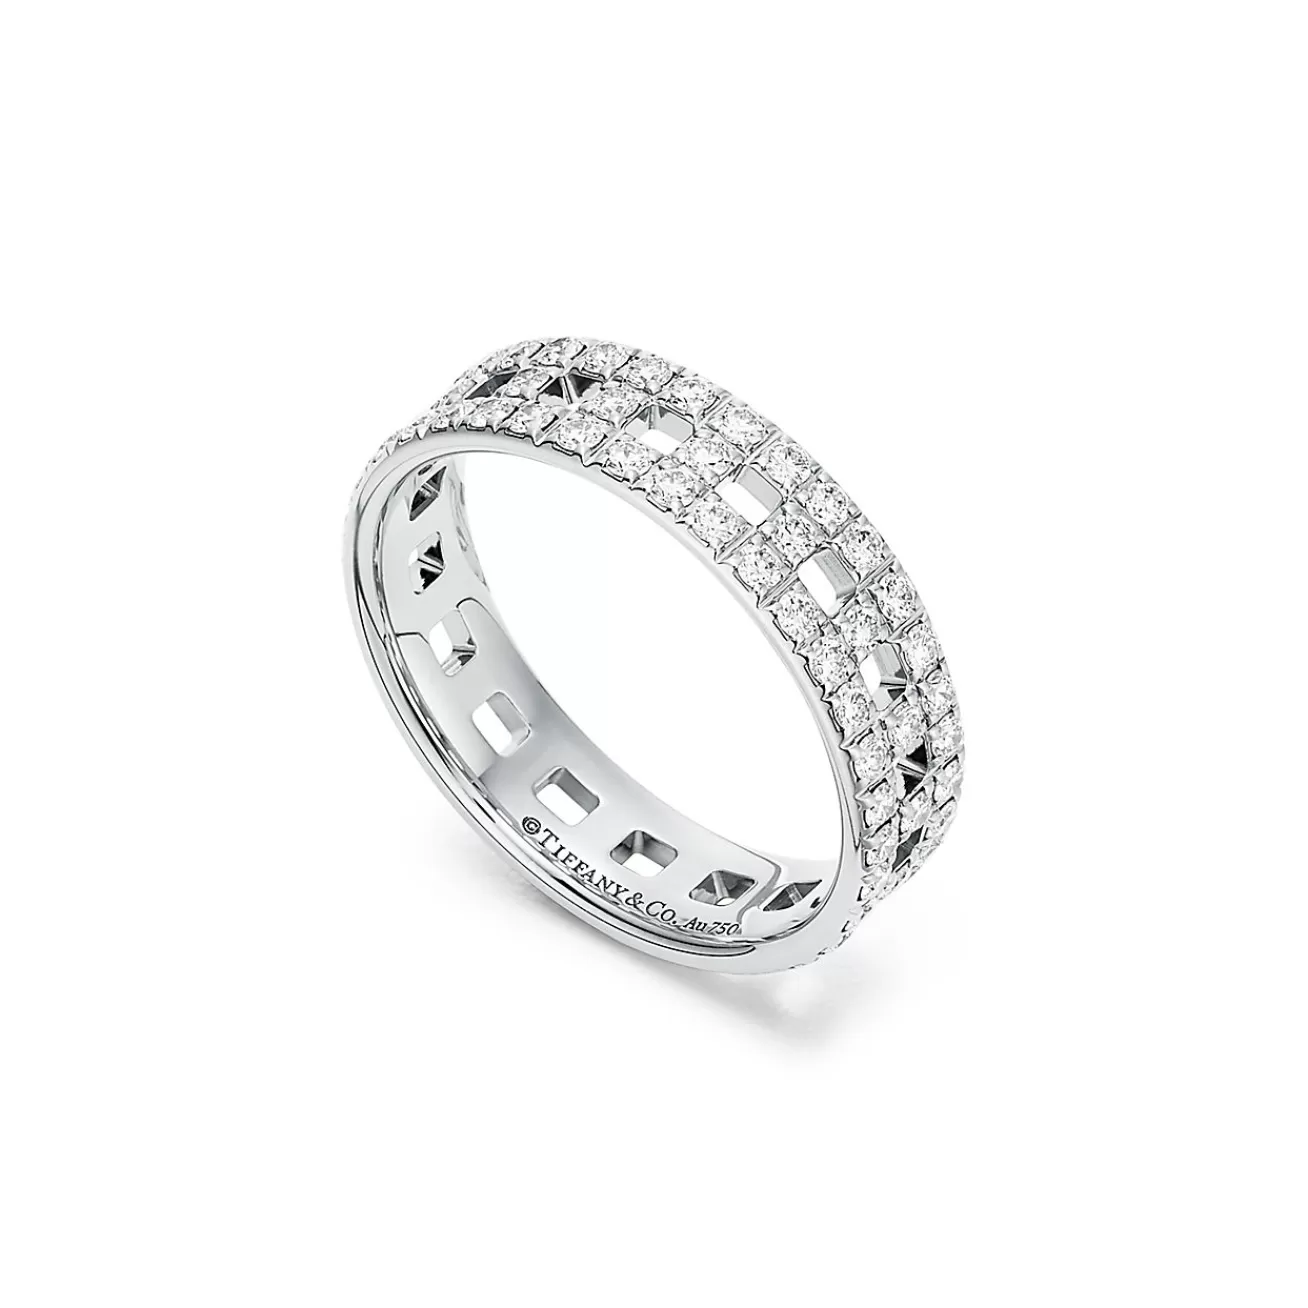 Tiffany & Co. Tiffany T True wide ring in 18k white gold with pavé diamonds, 5.5 mm wide. | ^Women Rings | Men's Jewelry